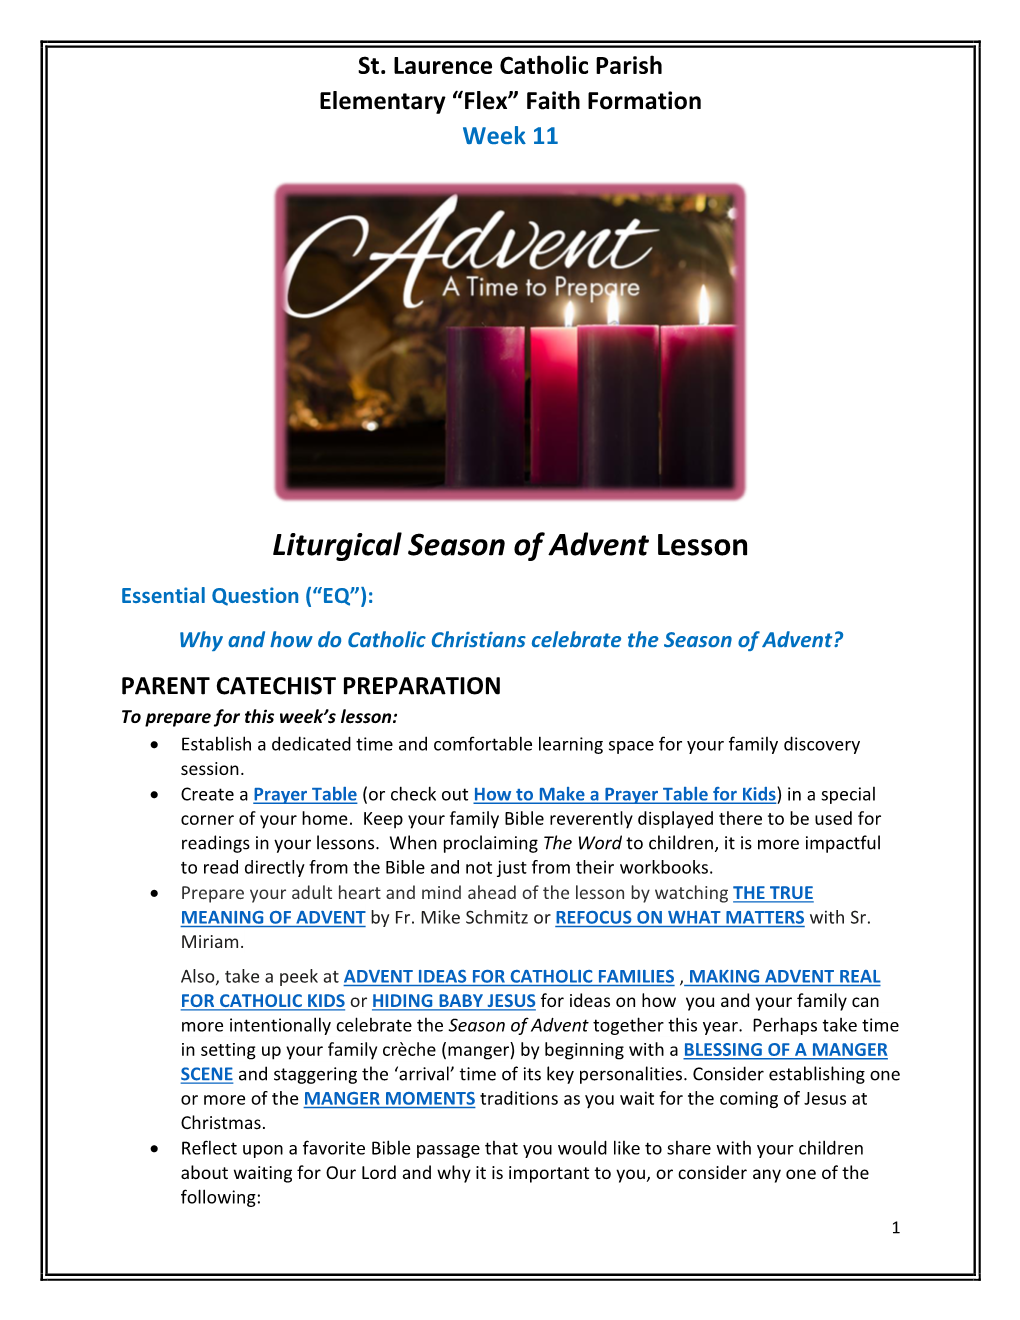 Liturgical Season of Advent Lesson